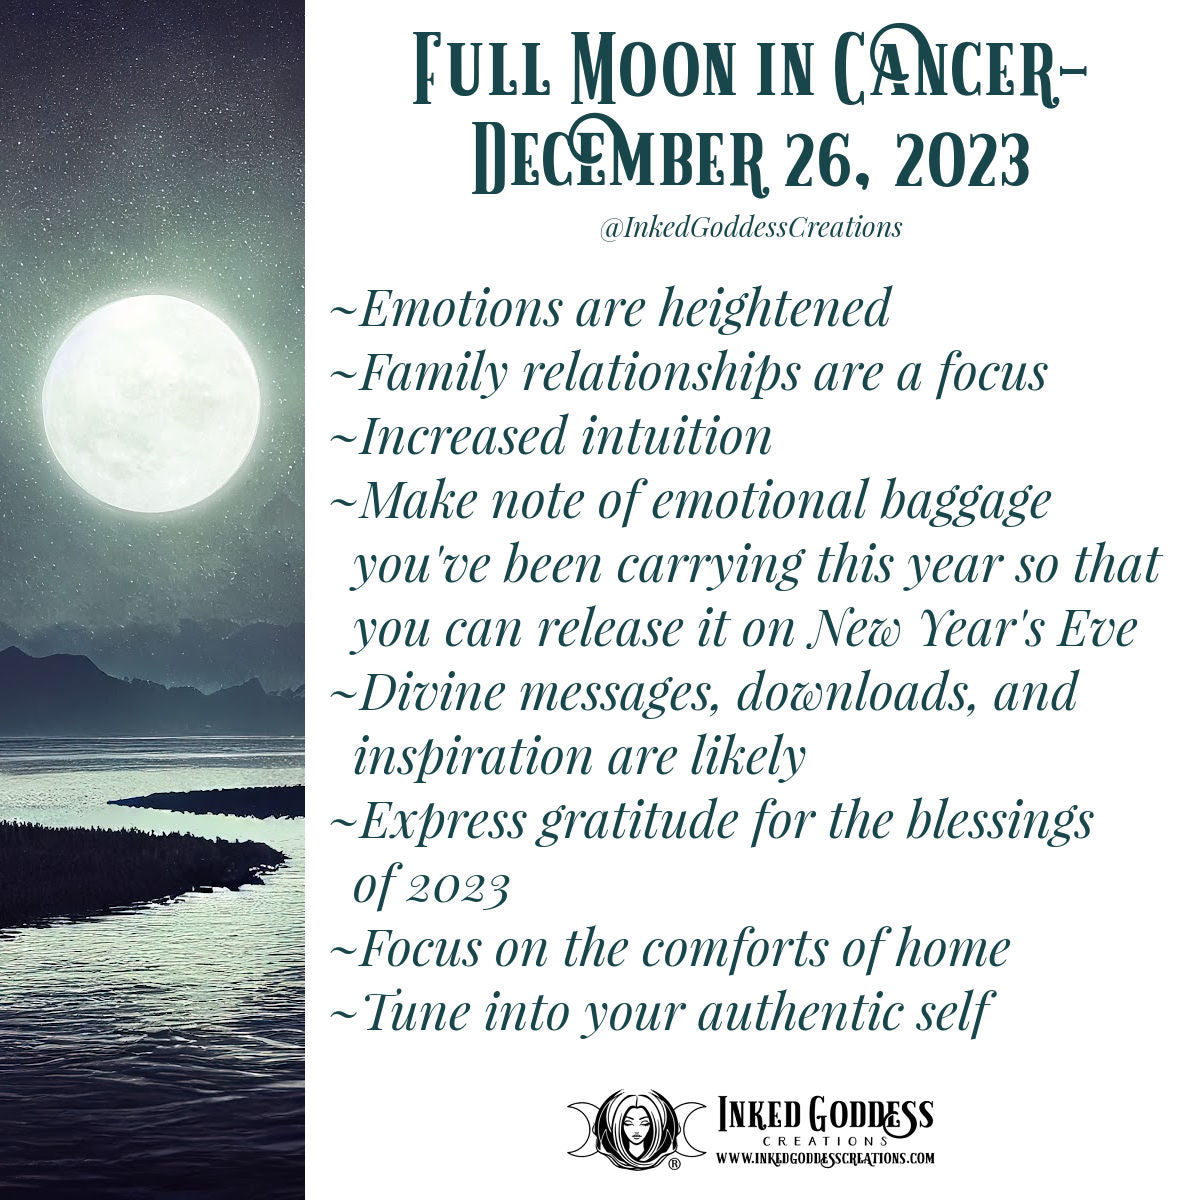 Full Moon in Cancer- December 26, 2023